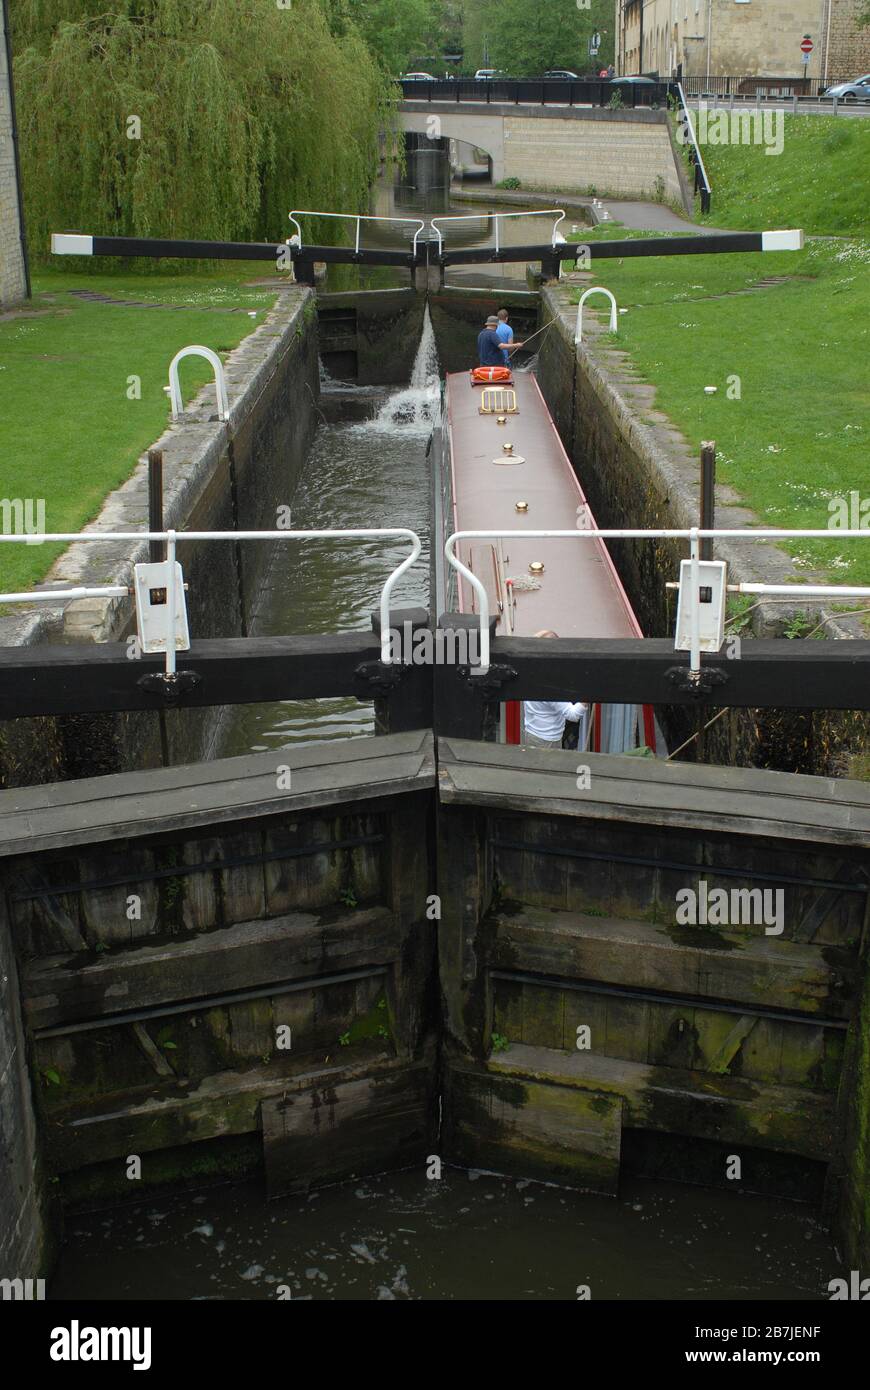 0569 Lock, South West, Waterway; Kennet&Avon Canal. Bath, North East Somerset Council. Großbritannien (Großbritannien). Foto: © Rosmi Duaso/fototextbcn. Stockfoto